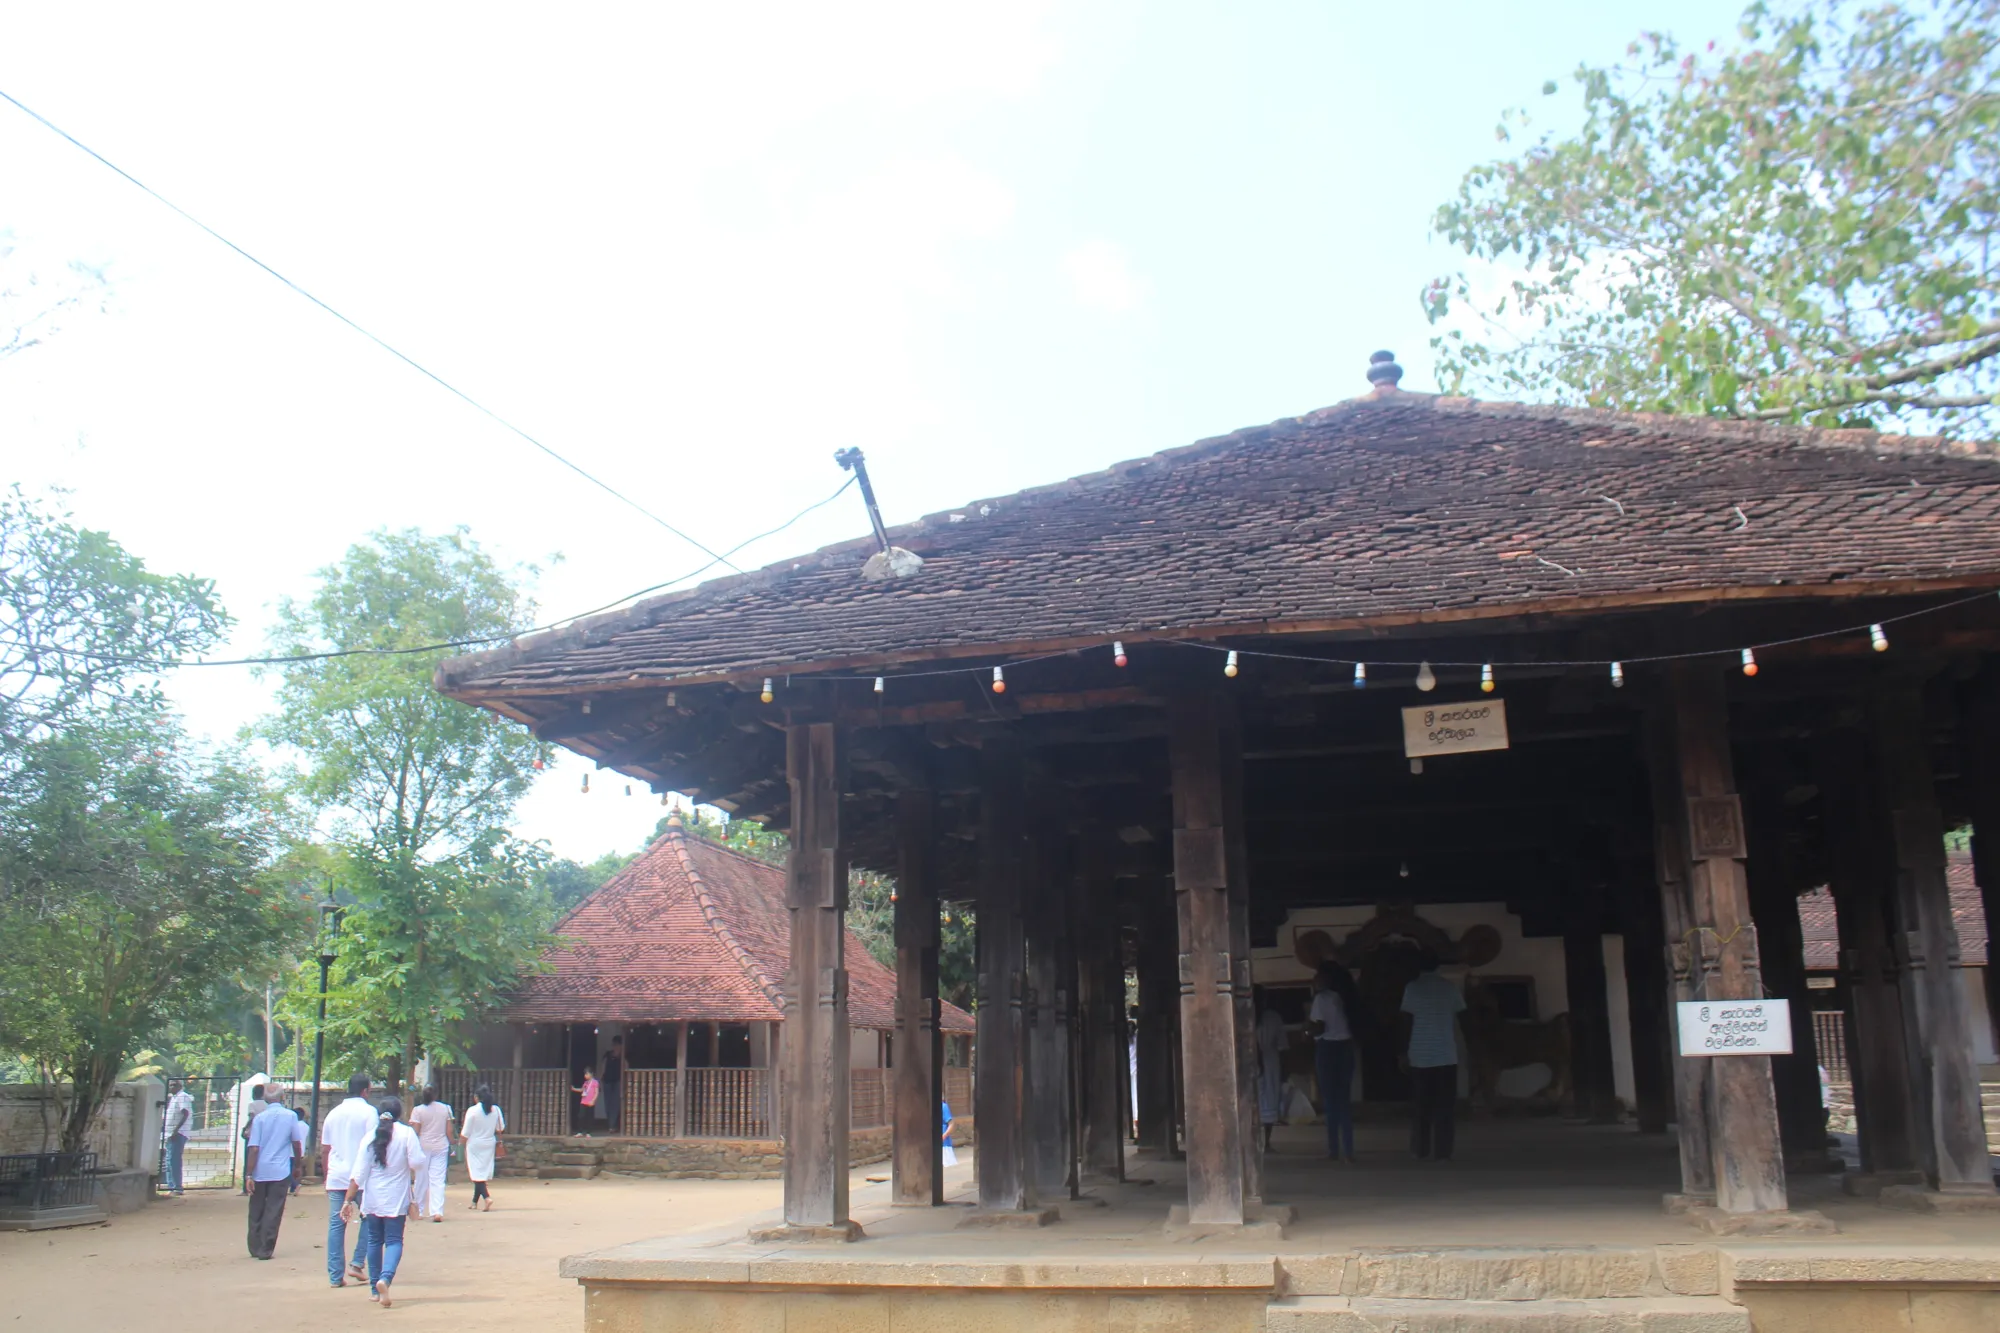 Local devotees visiting Embekka Devalaya, Sri Lanka